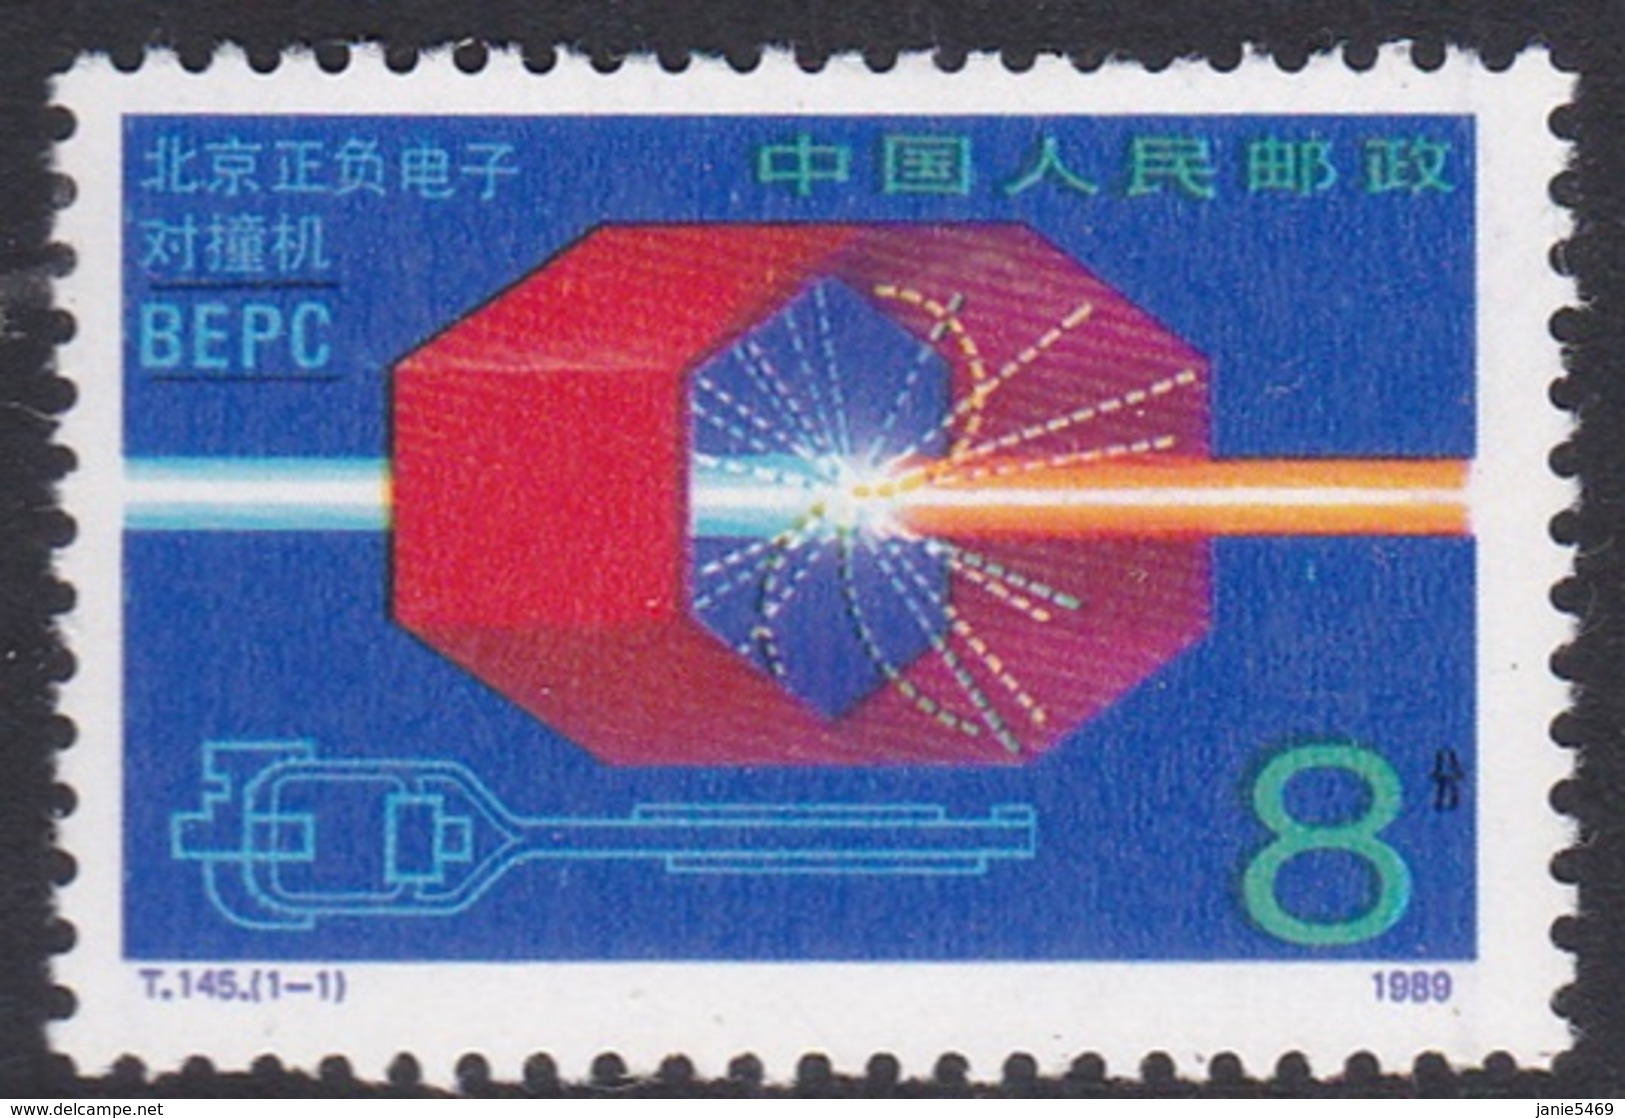 China People's Republic SG 3643 1989 Peking Electron Positron Collider, Mint Never Hinged - Neufs